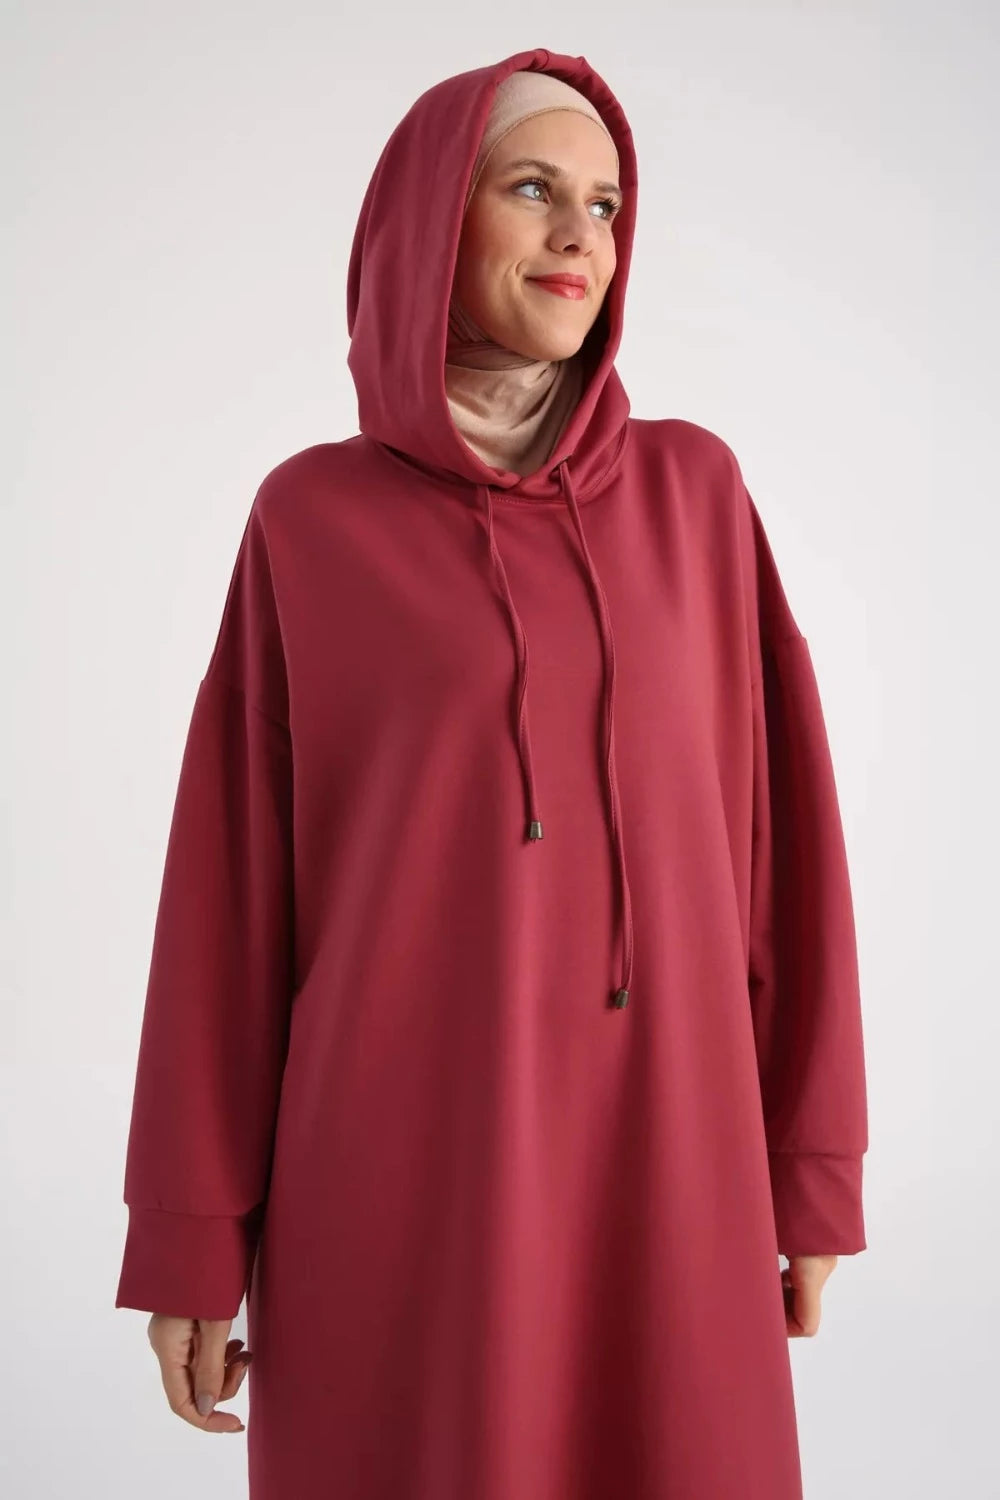 Plus Size Modest Hooded Knitted Dress| Dana Fashion